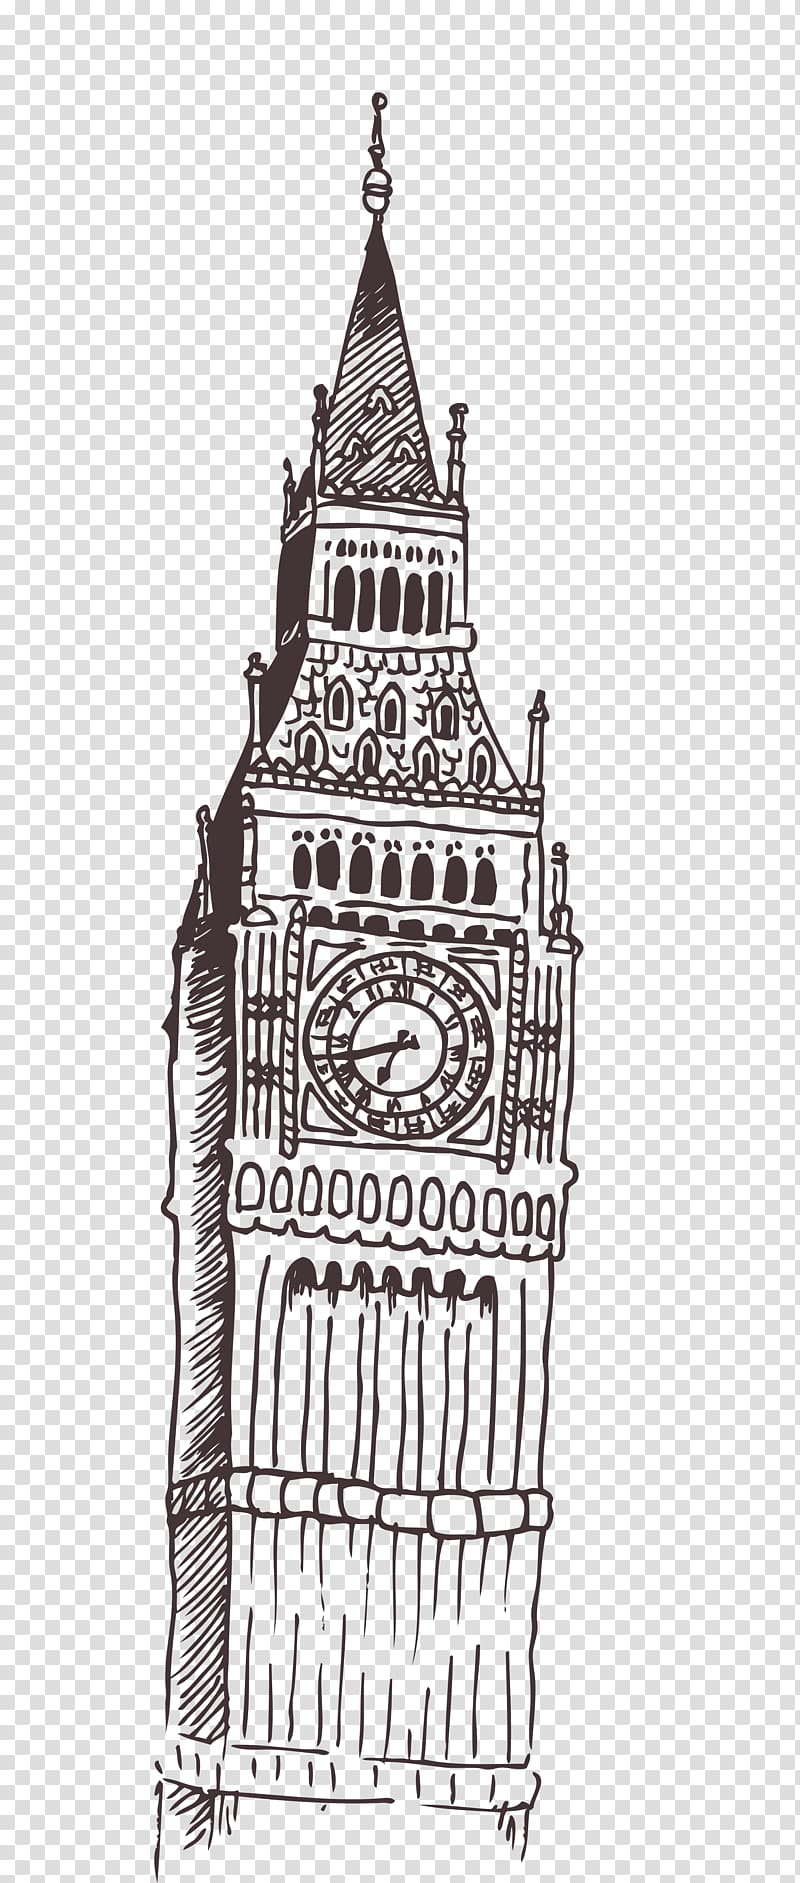 Clock Tower Illustration Big Ben Tower Of London Computer